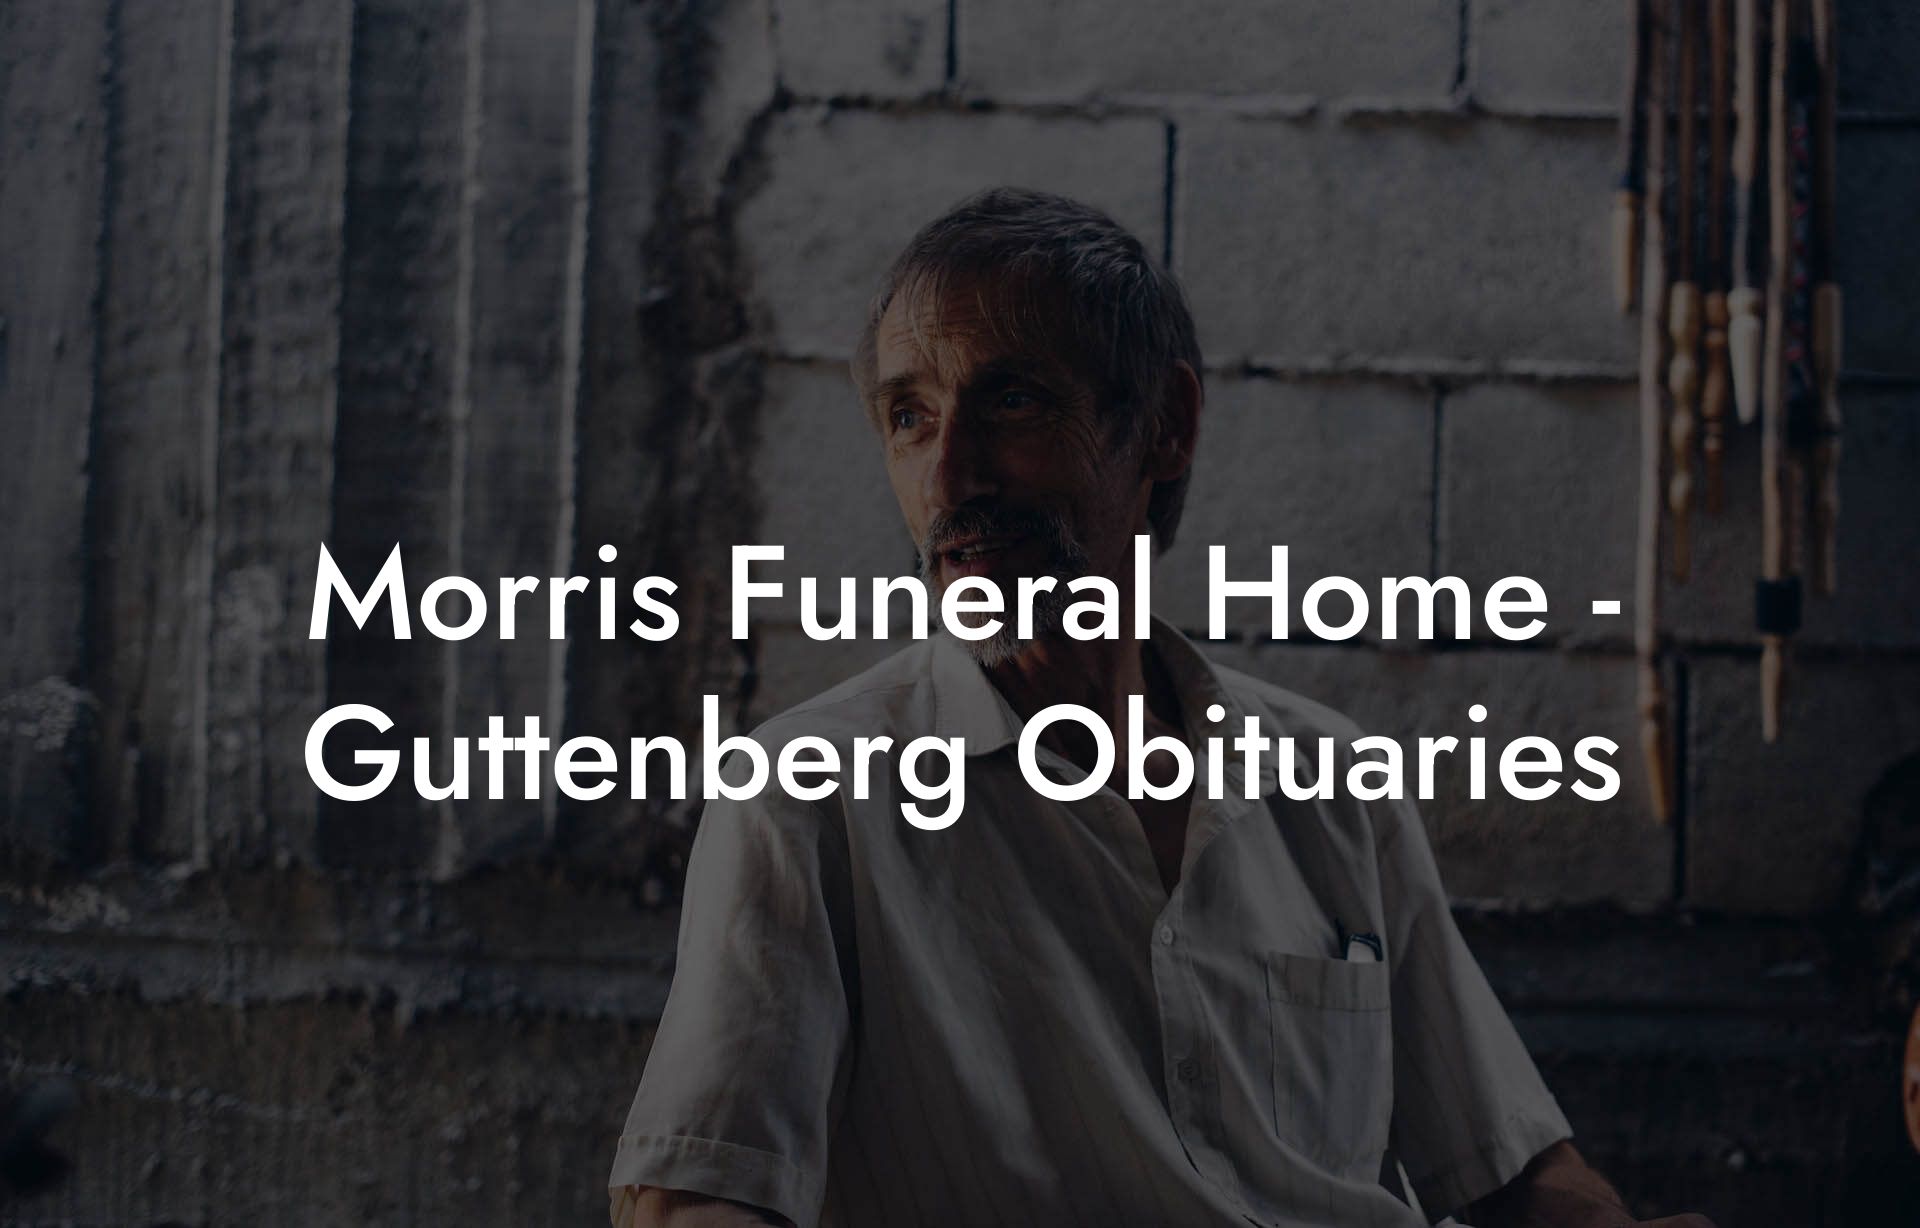 Morris Funeral Home - Guttenberg Obituaries